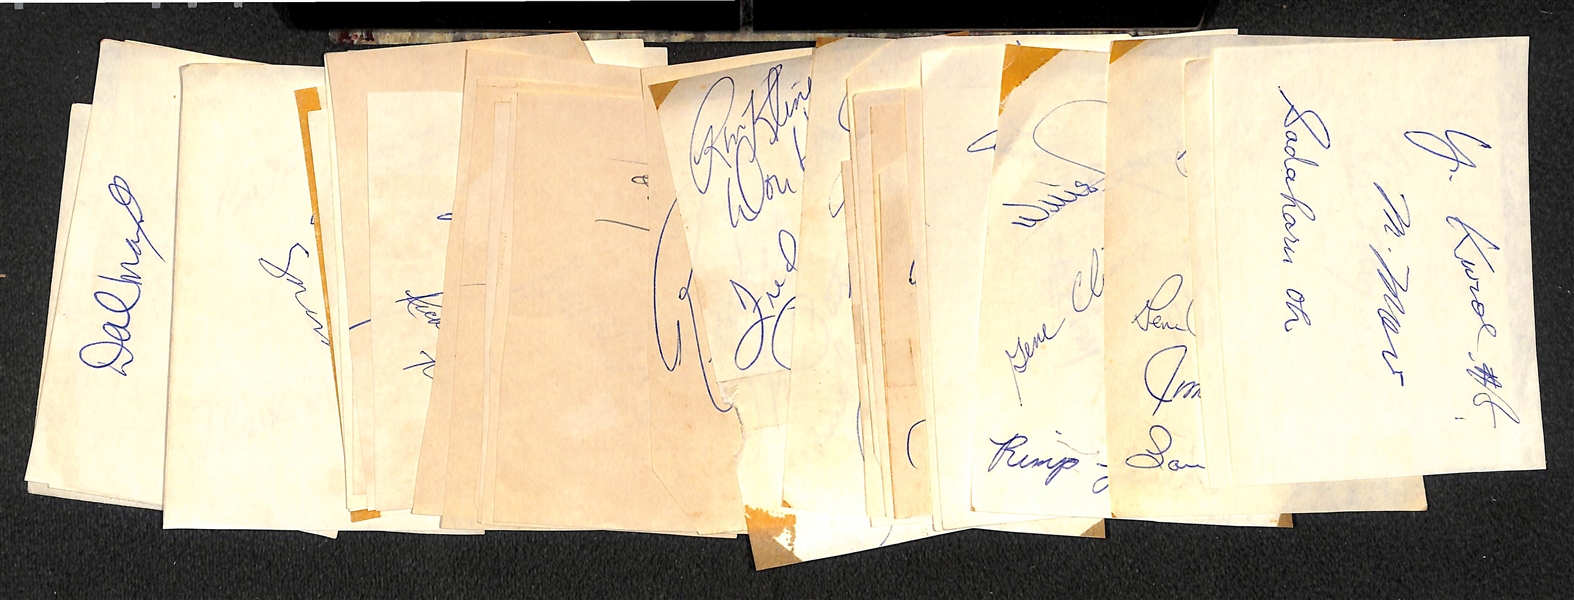 Lot of 32 Autograph Album Cuts w. Over 65 Signatures inc. Sadaharu Oh, Bench, Stargell, Mareroski, Luke Appling,+ (JSA Auction Letter)